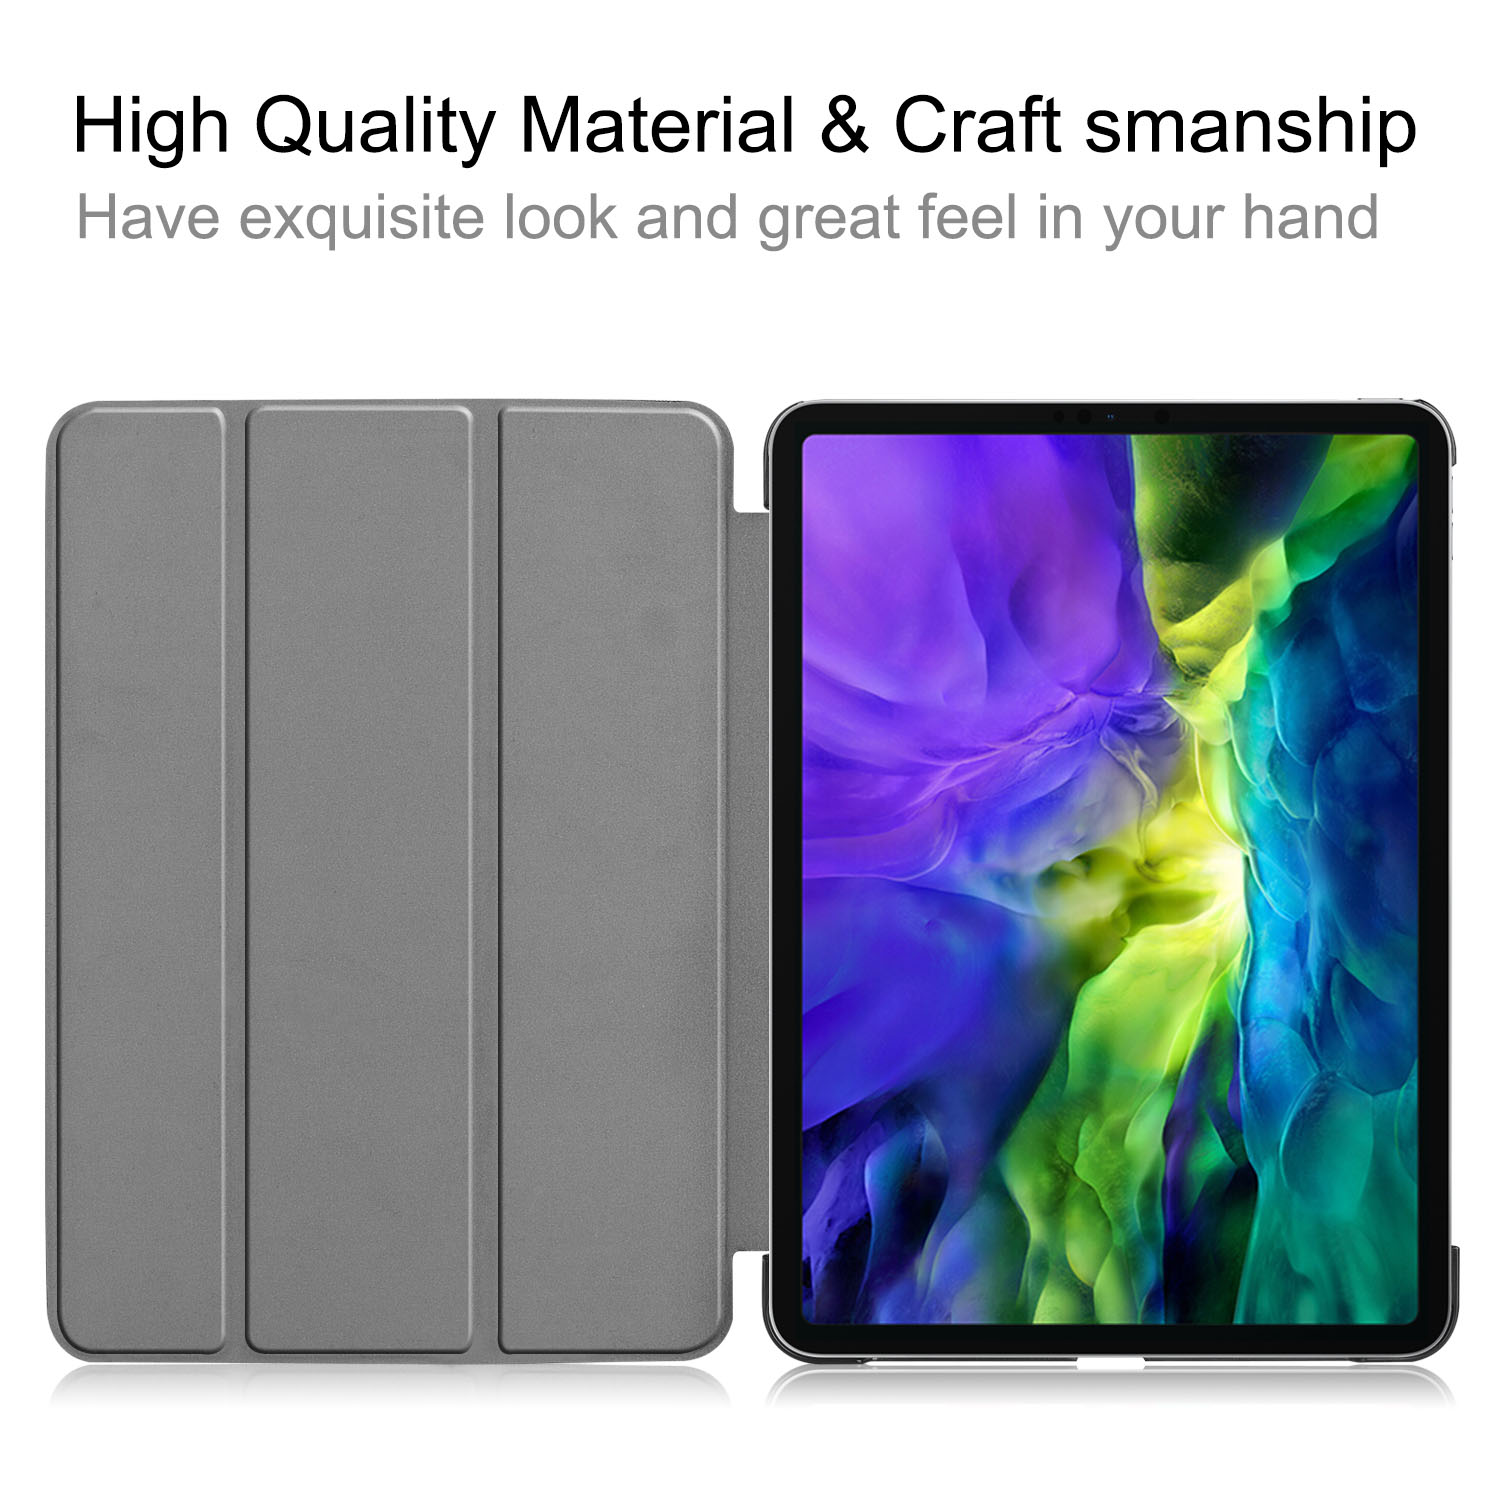 Smart cover/ställ, iPad Pro 11 (2020), lila